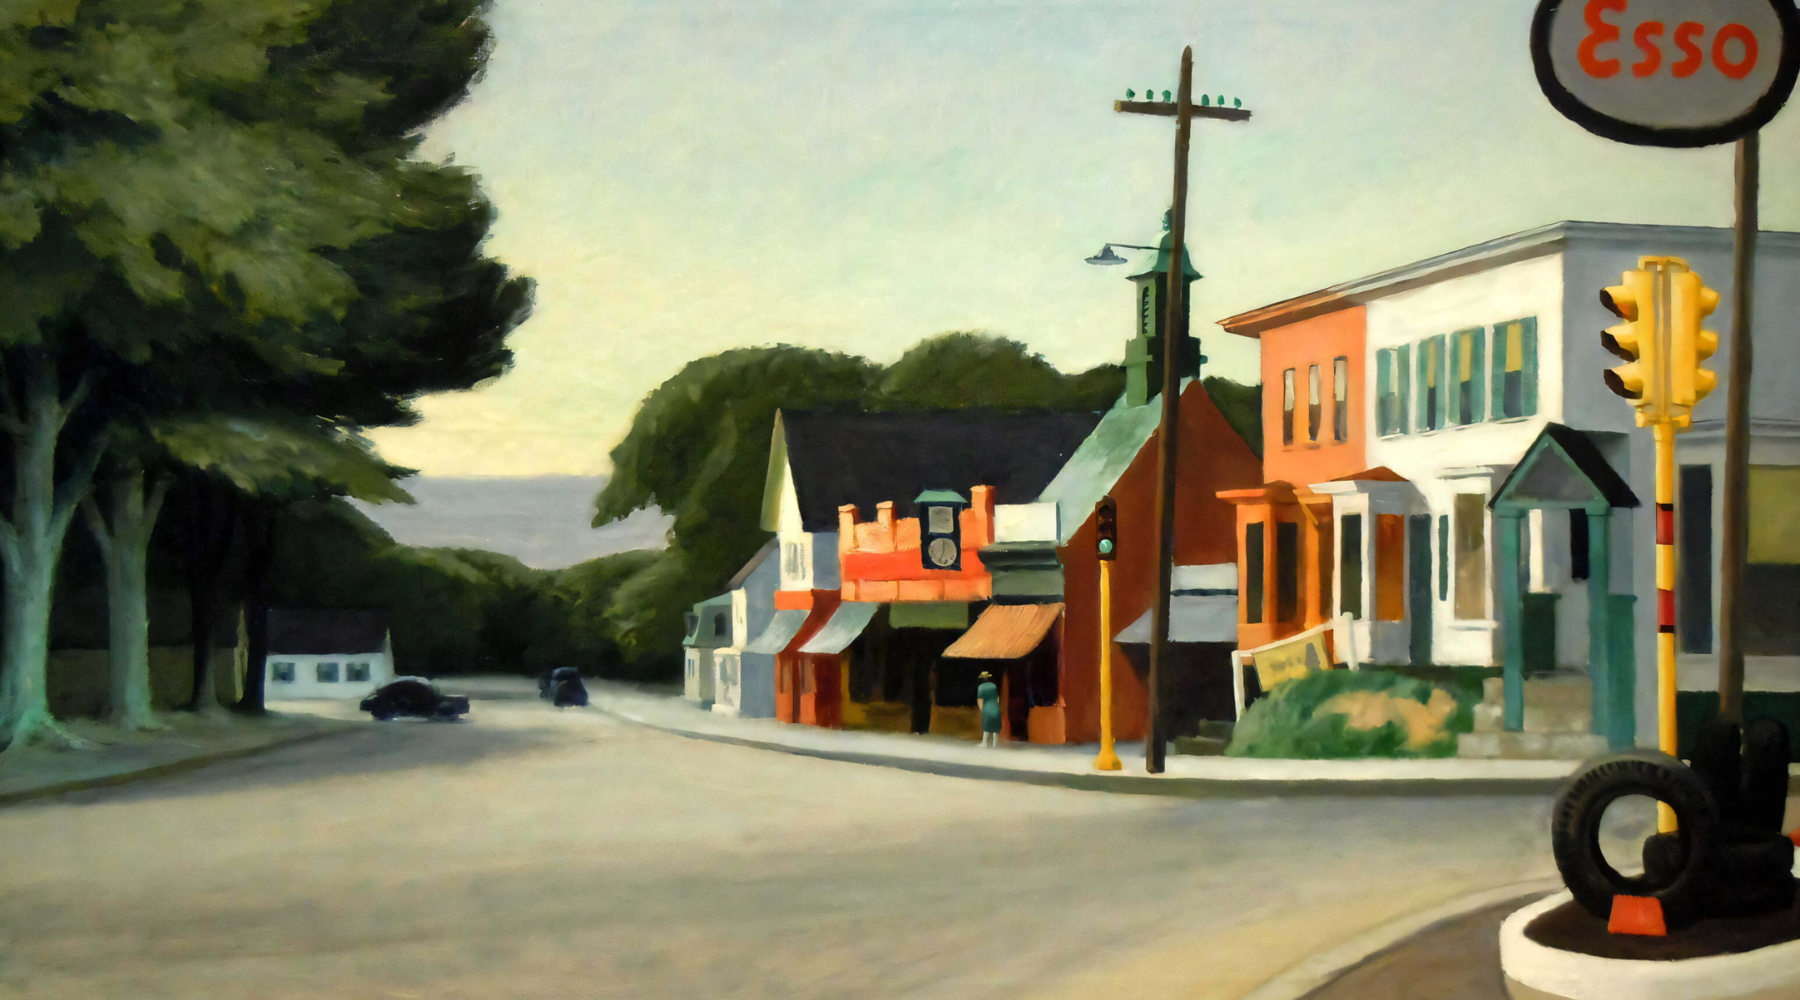 Edward Hopper, American realism, iconic paintings, Nighthawks, art prints, urban life, solitude, introspection, nostalgia, Americana